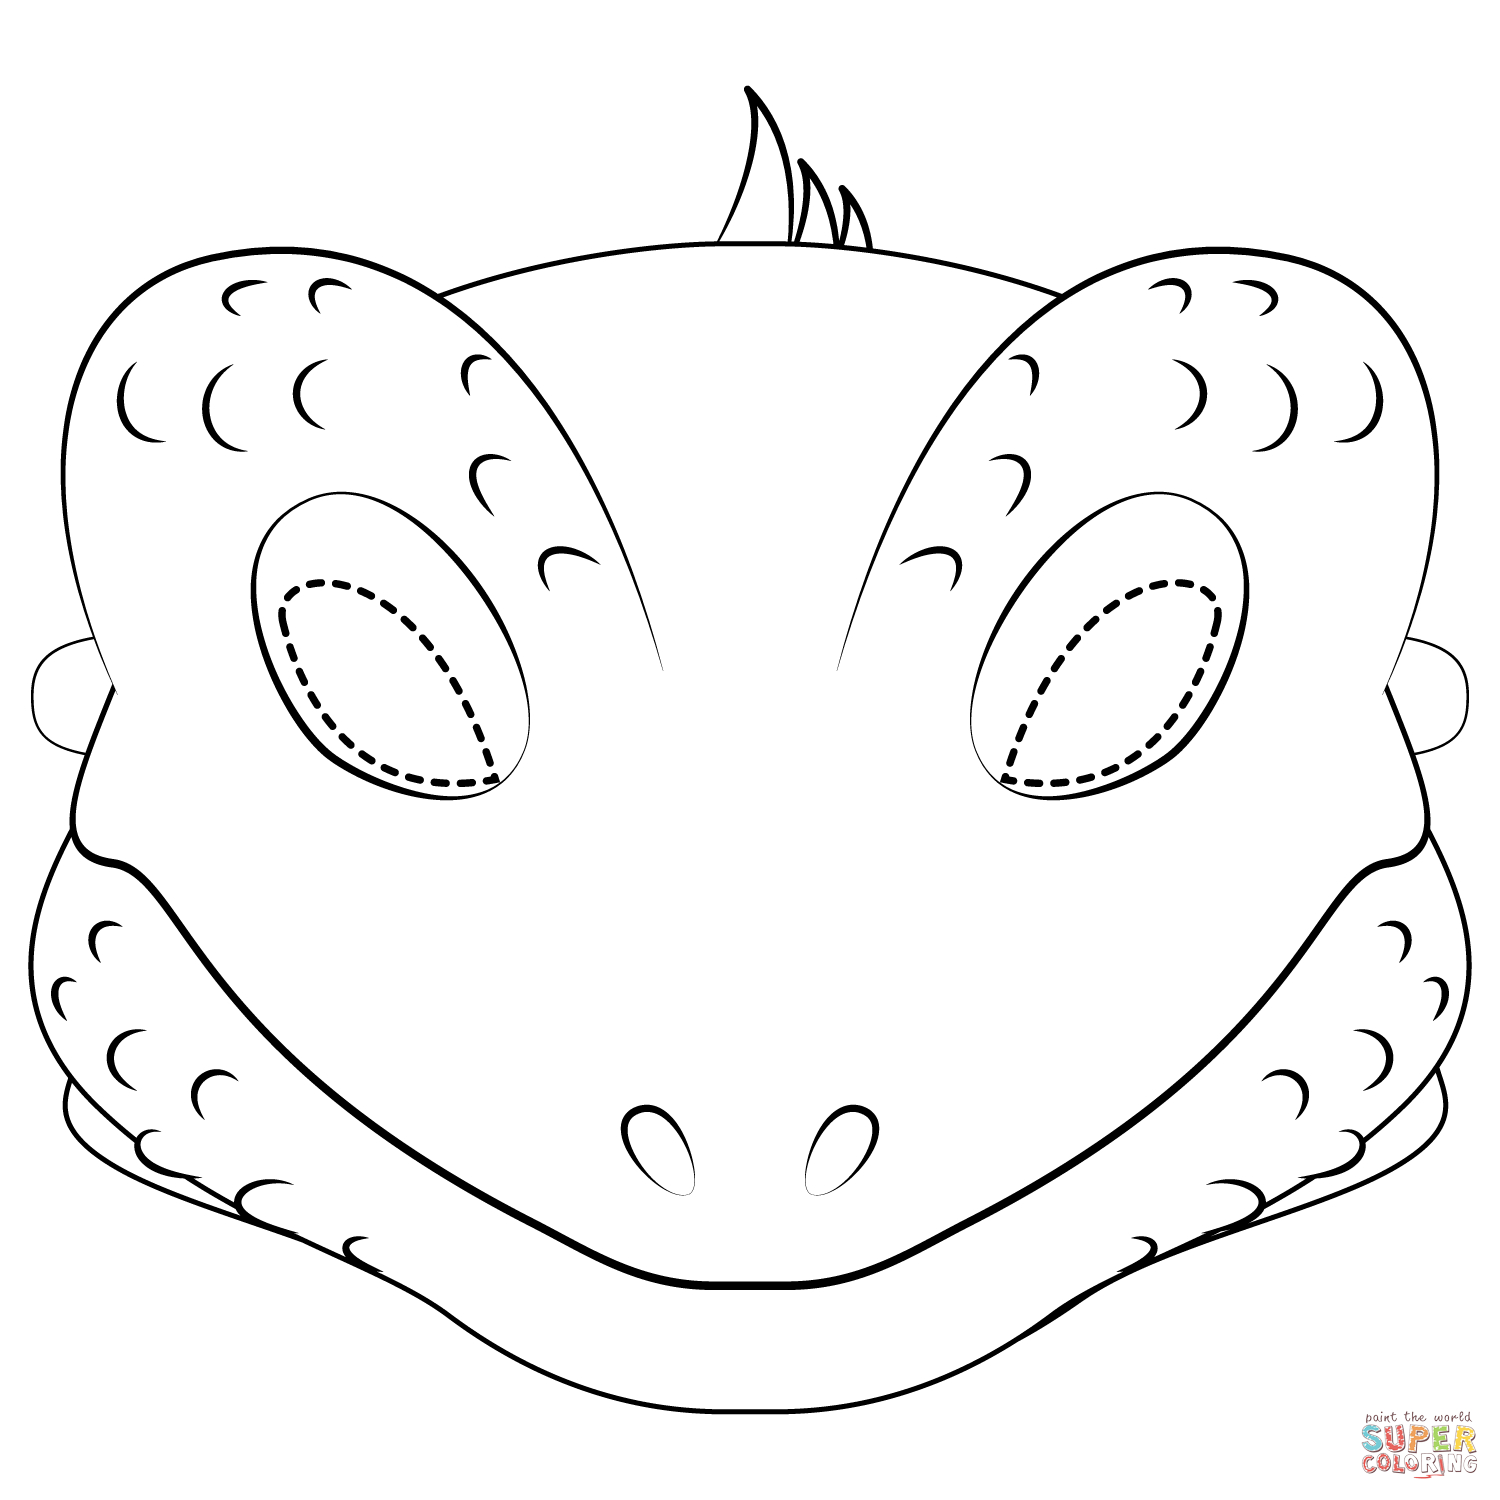 Lizard Mask Coloring Page | Free Printable Coloring Pages - Free Printable Lizard Mask